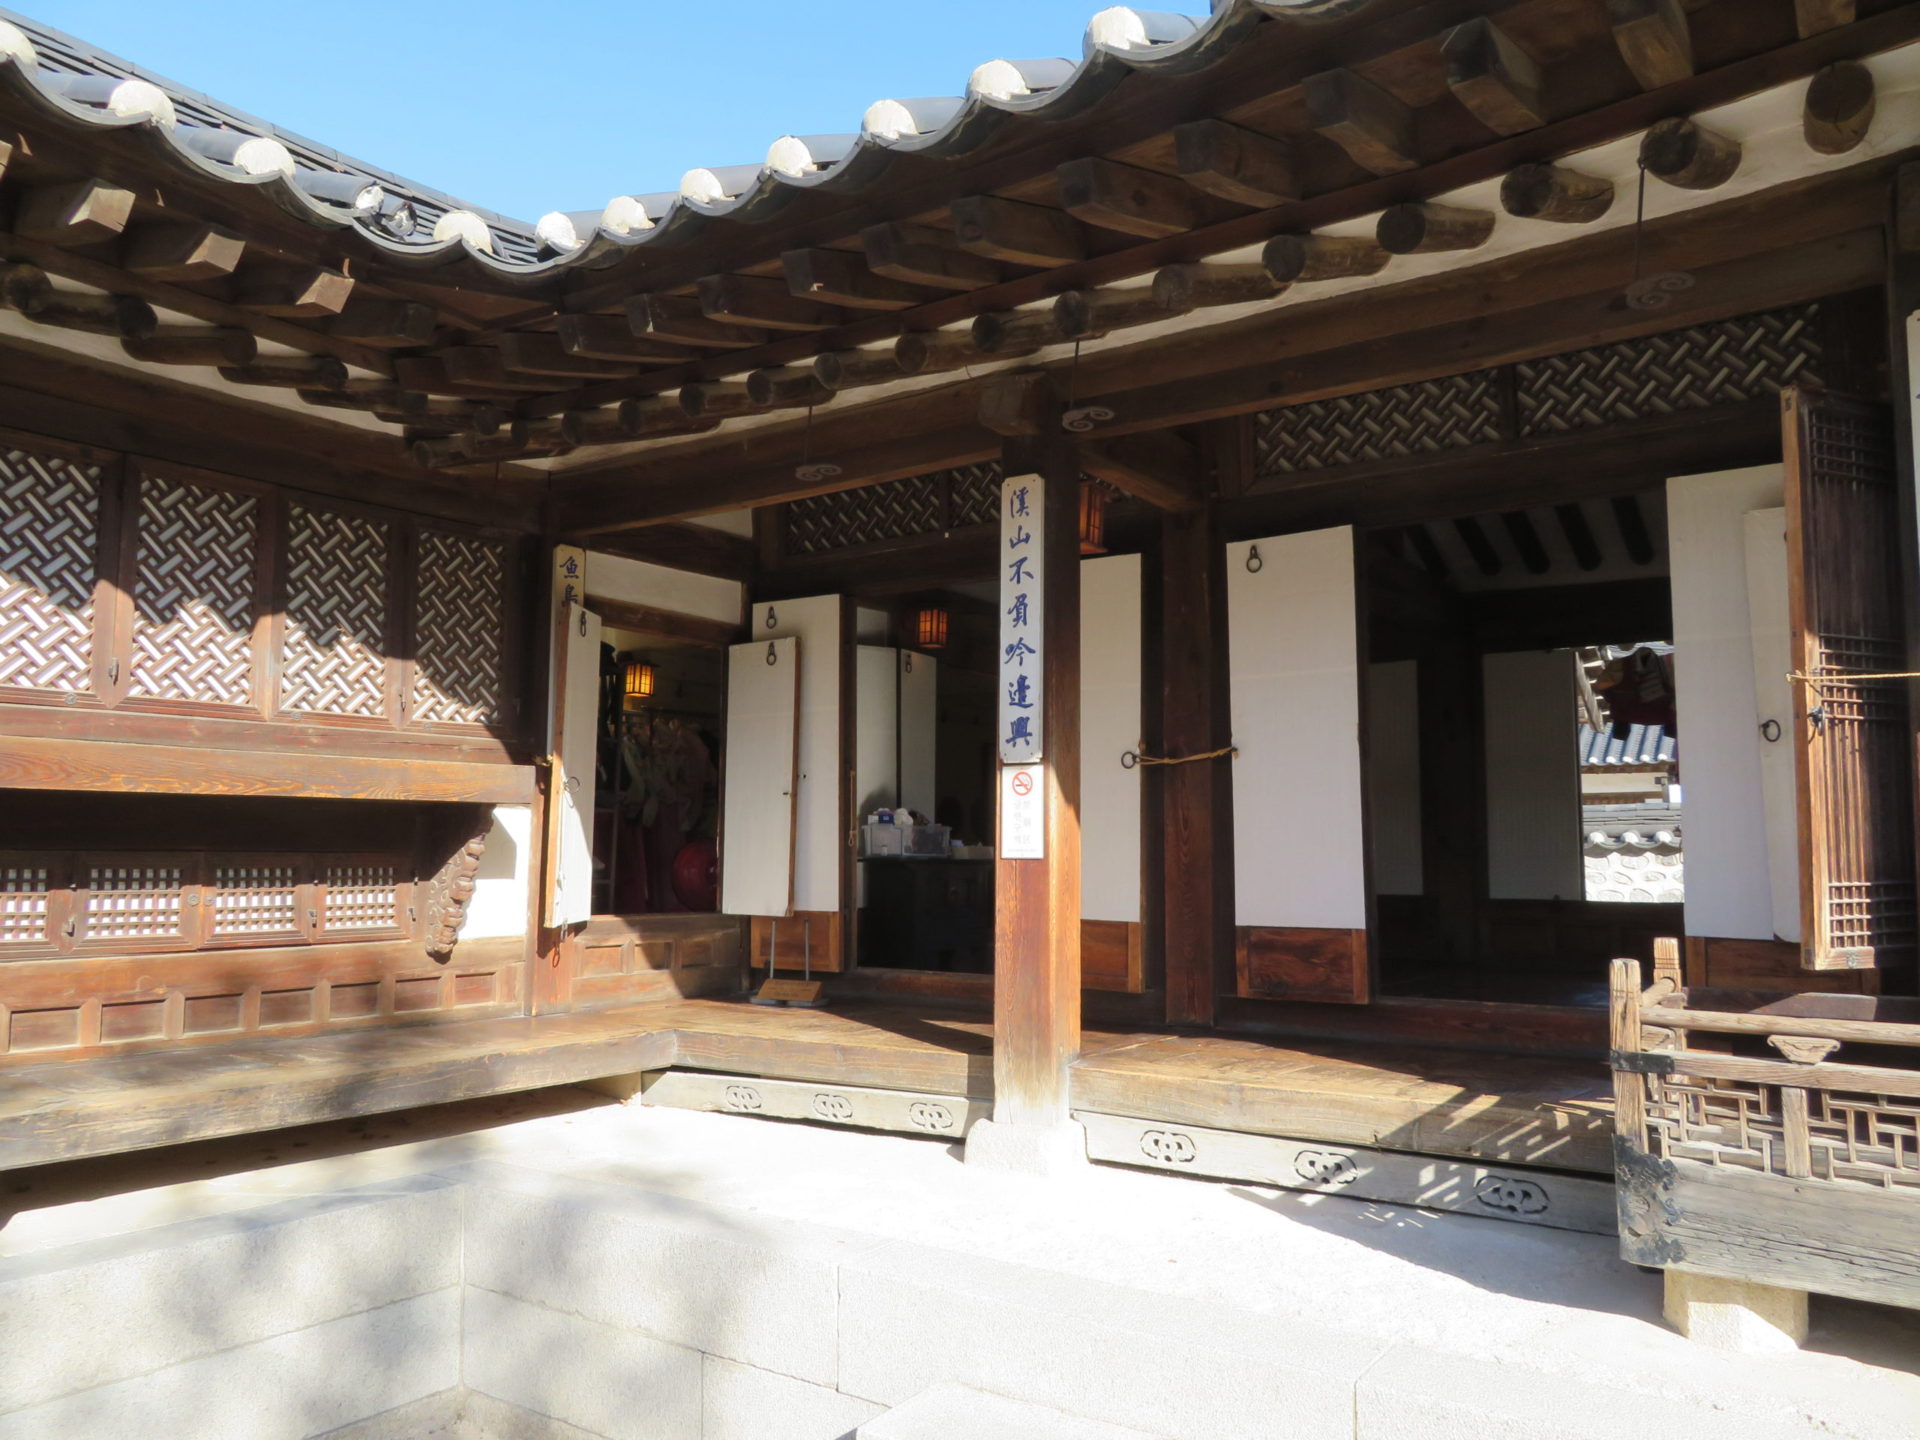 Restored Ancient House at theTraditional Namsangol Hanok Village in Seoul